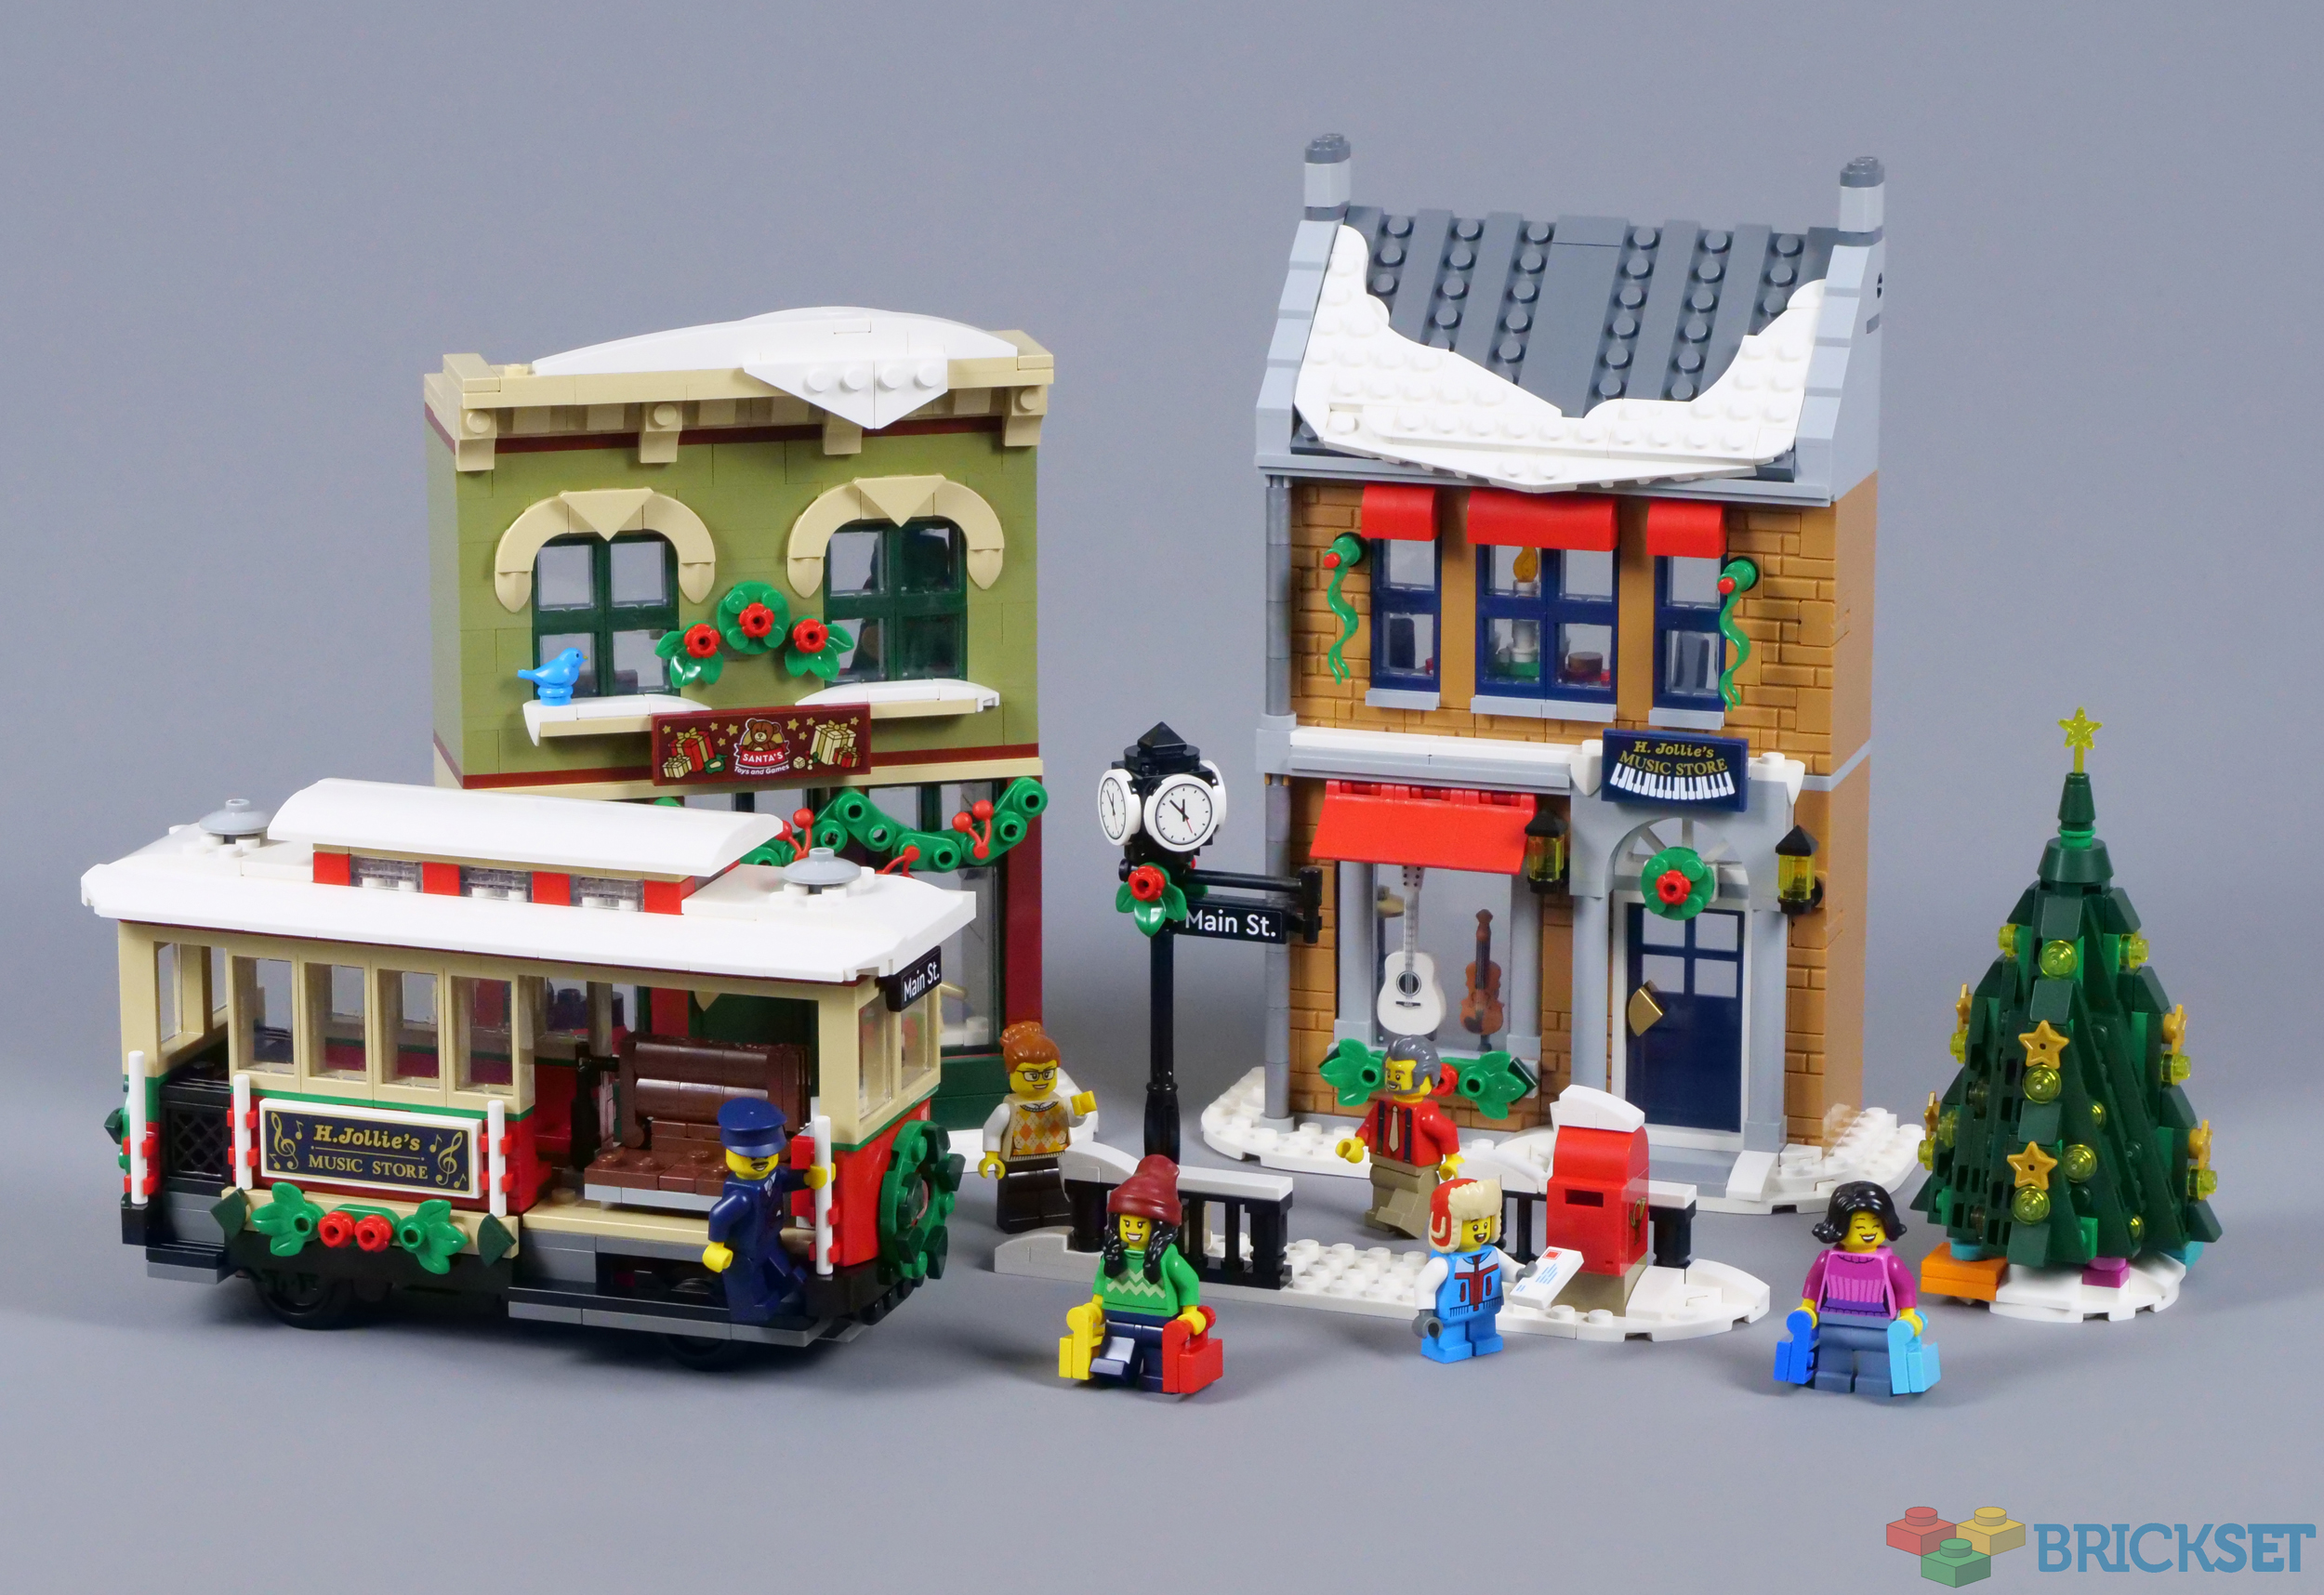 LEGO IDEAS - The Holidays Window Displays